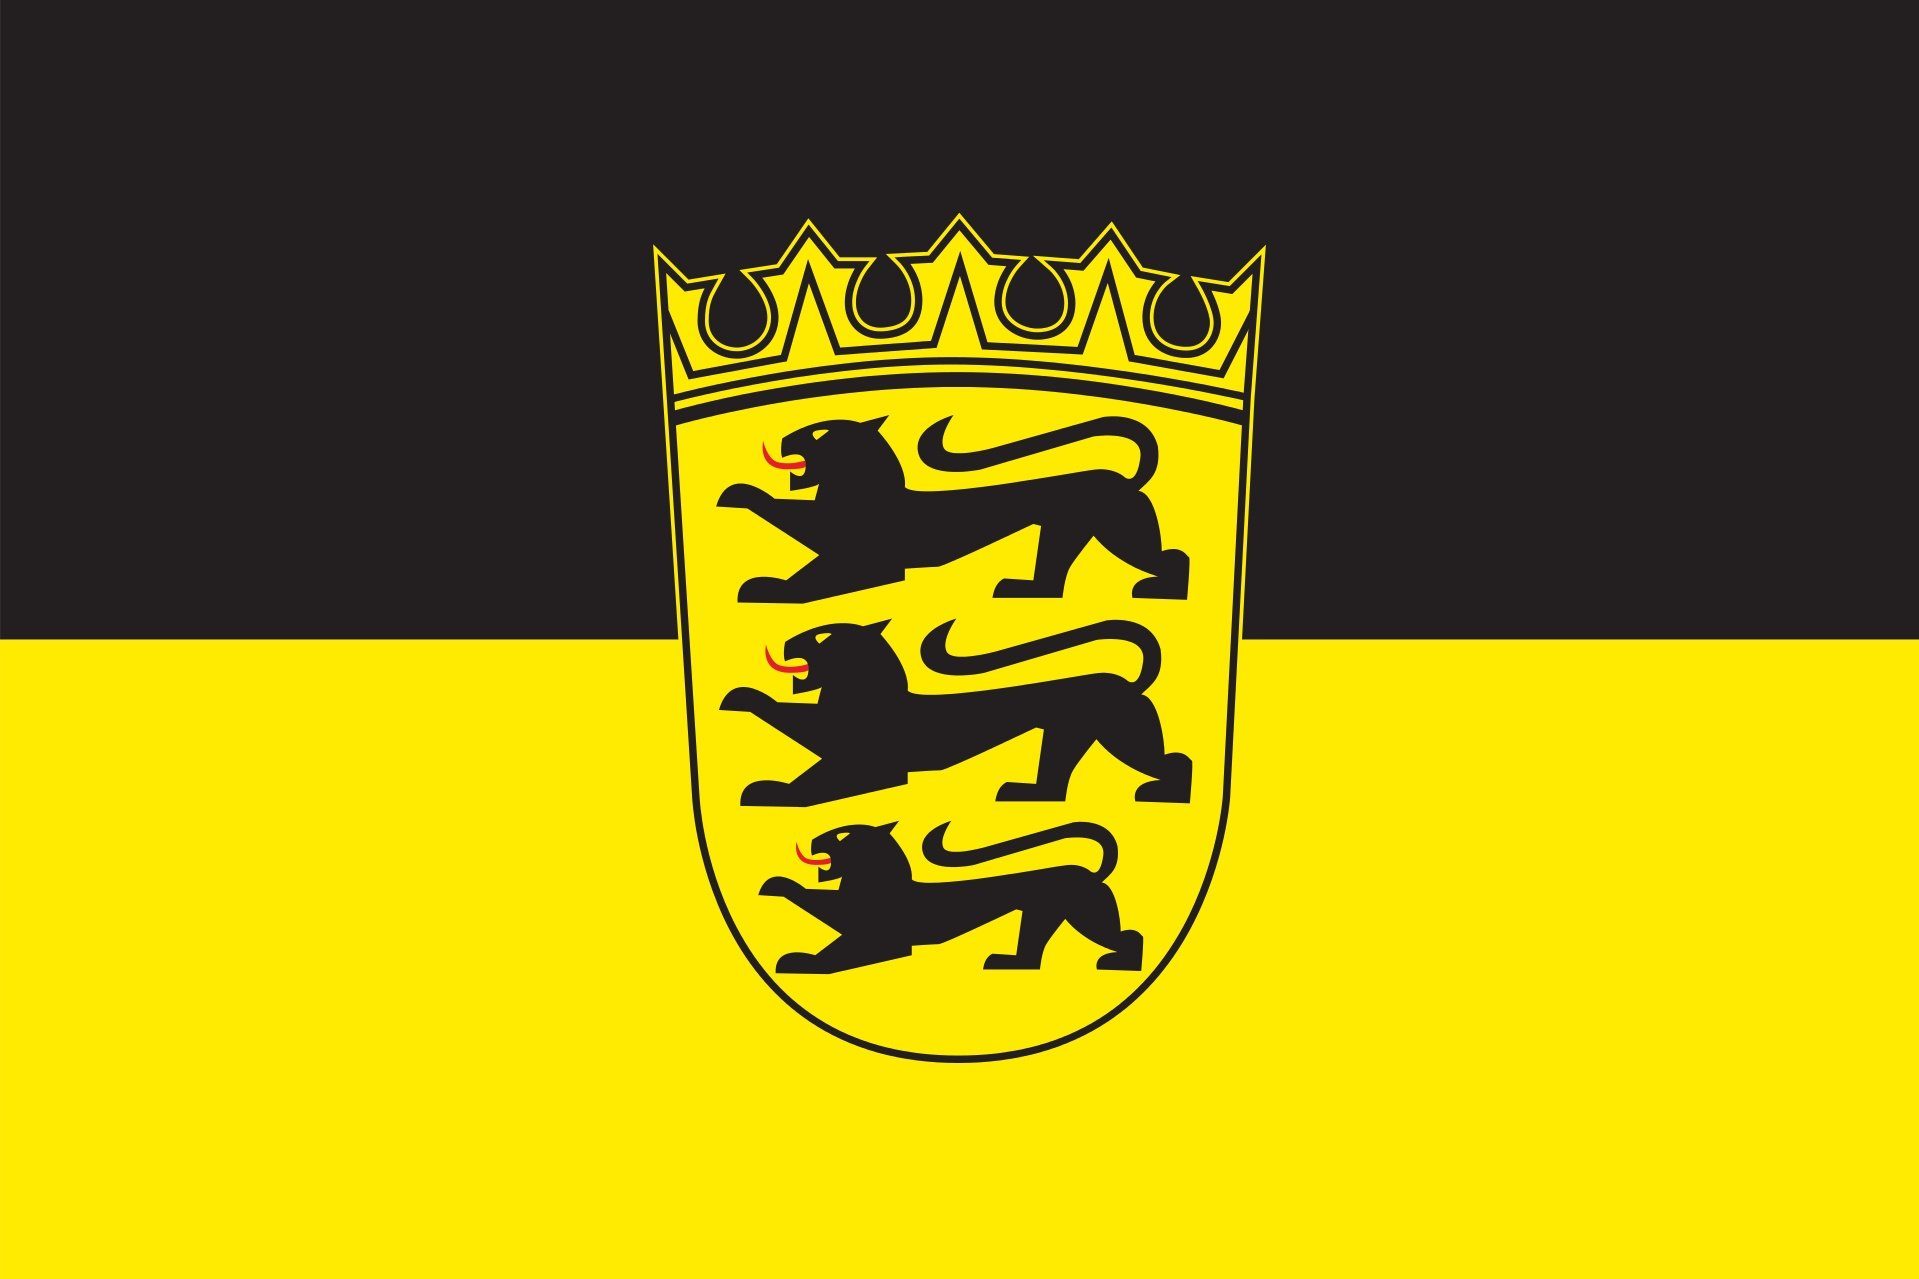 flaggenmeer Flagge Baden-Württemberg mit Wappen 160 g/m² Querformat